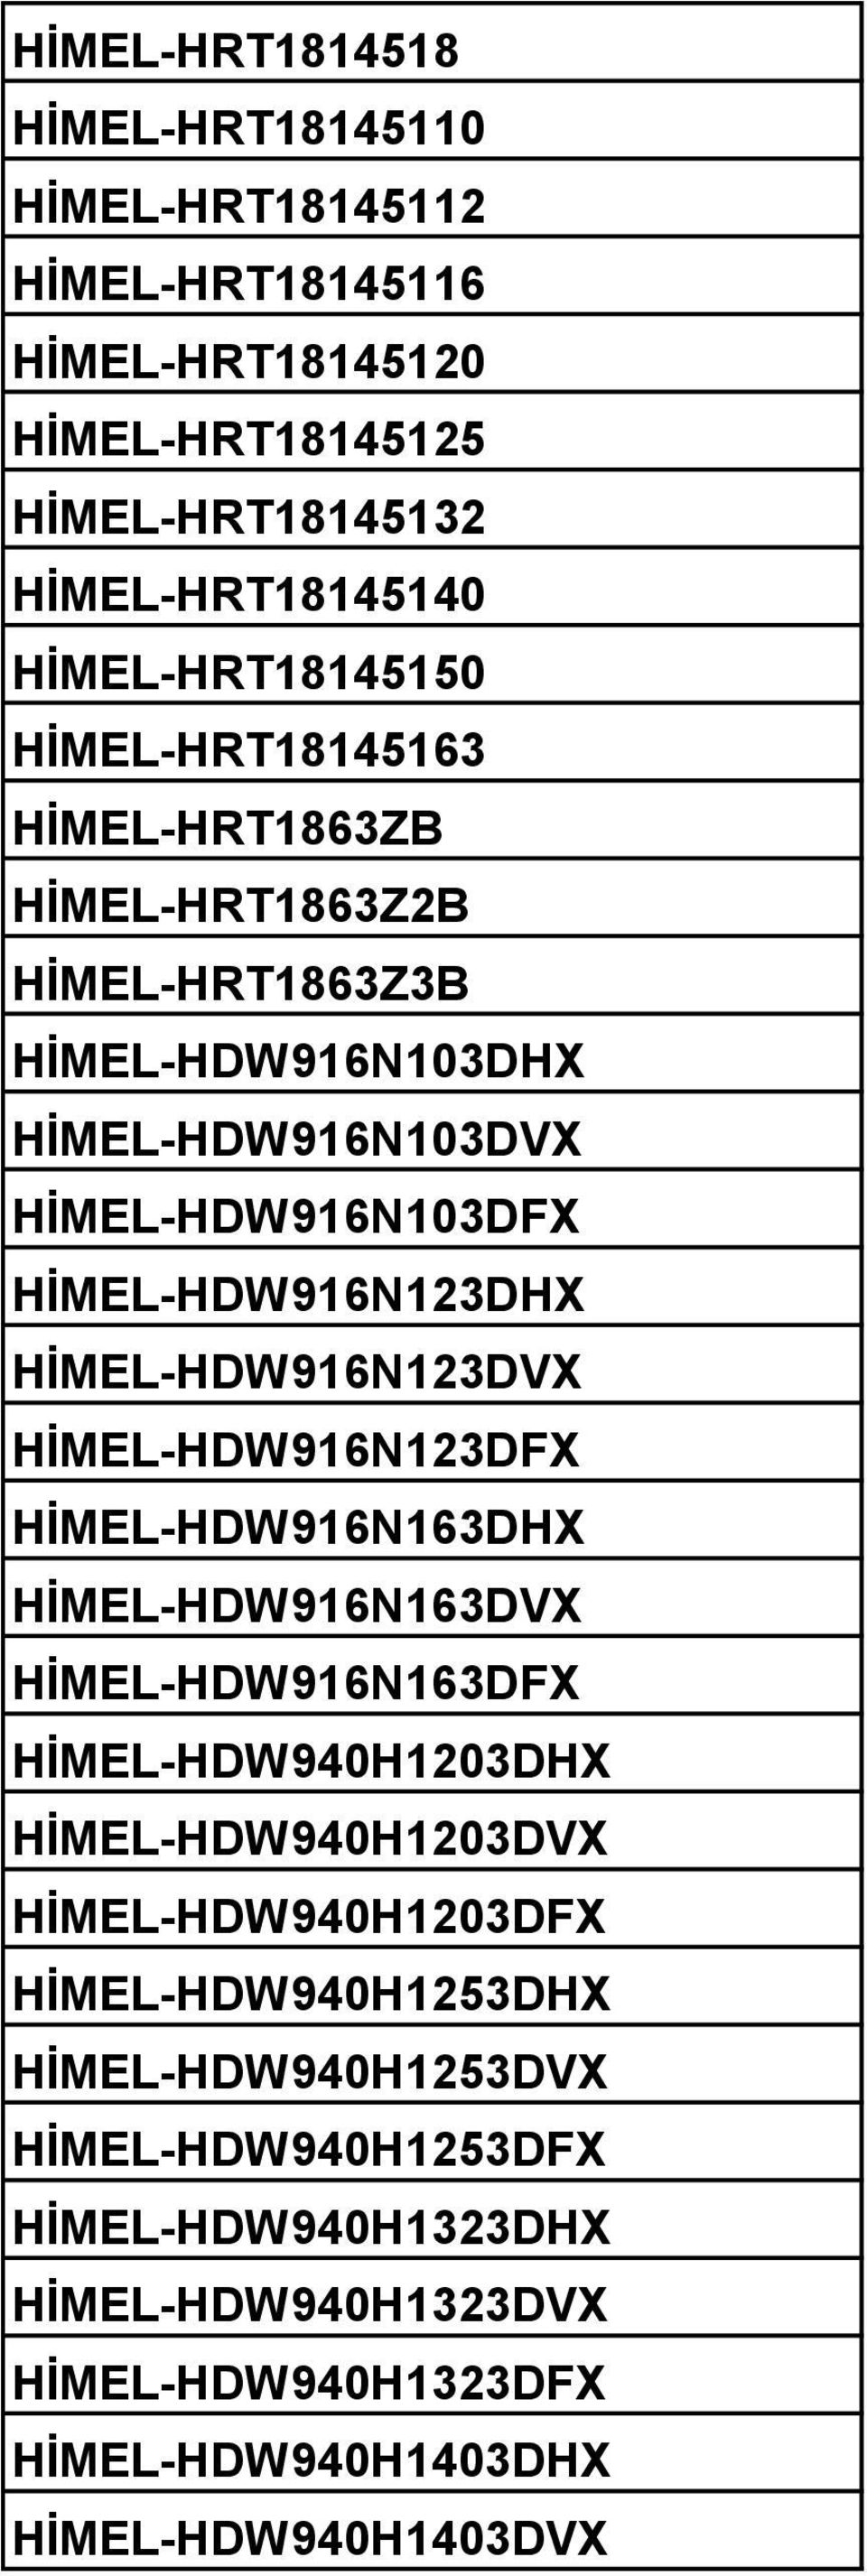 HİMEL-HDW916N123DHX HİMEL-HDW916N123DVX HİMEL-HDW916N123DFX HİMEL-HDW916N163DHX HİMEL-HDW916N163DVX HİMEL-HDW916N163DFX HİMEL-HDW940H1203DHX